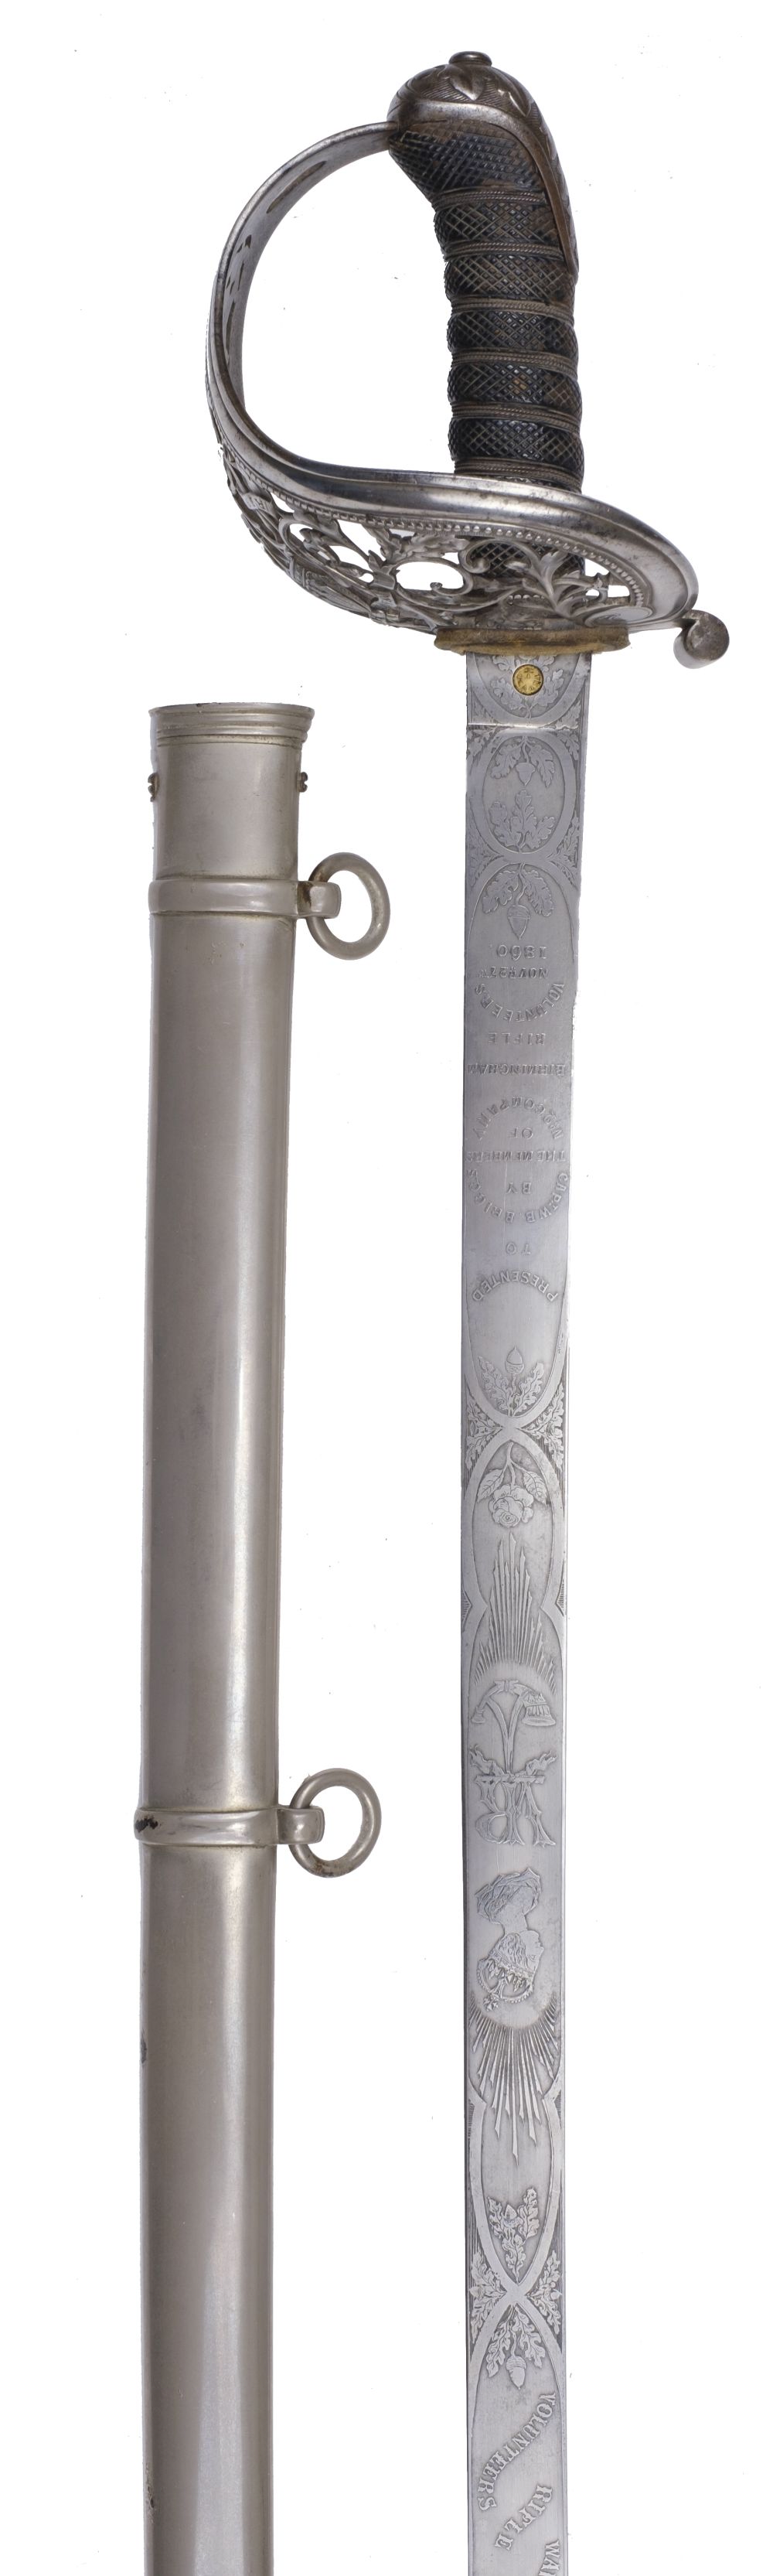 Sword. A fine Victorian Warwickshire Rifle Volunteers presentation sword